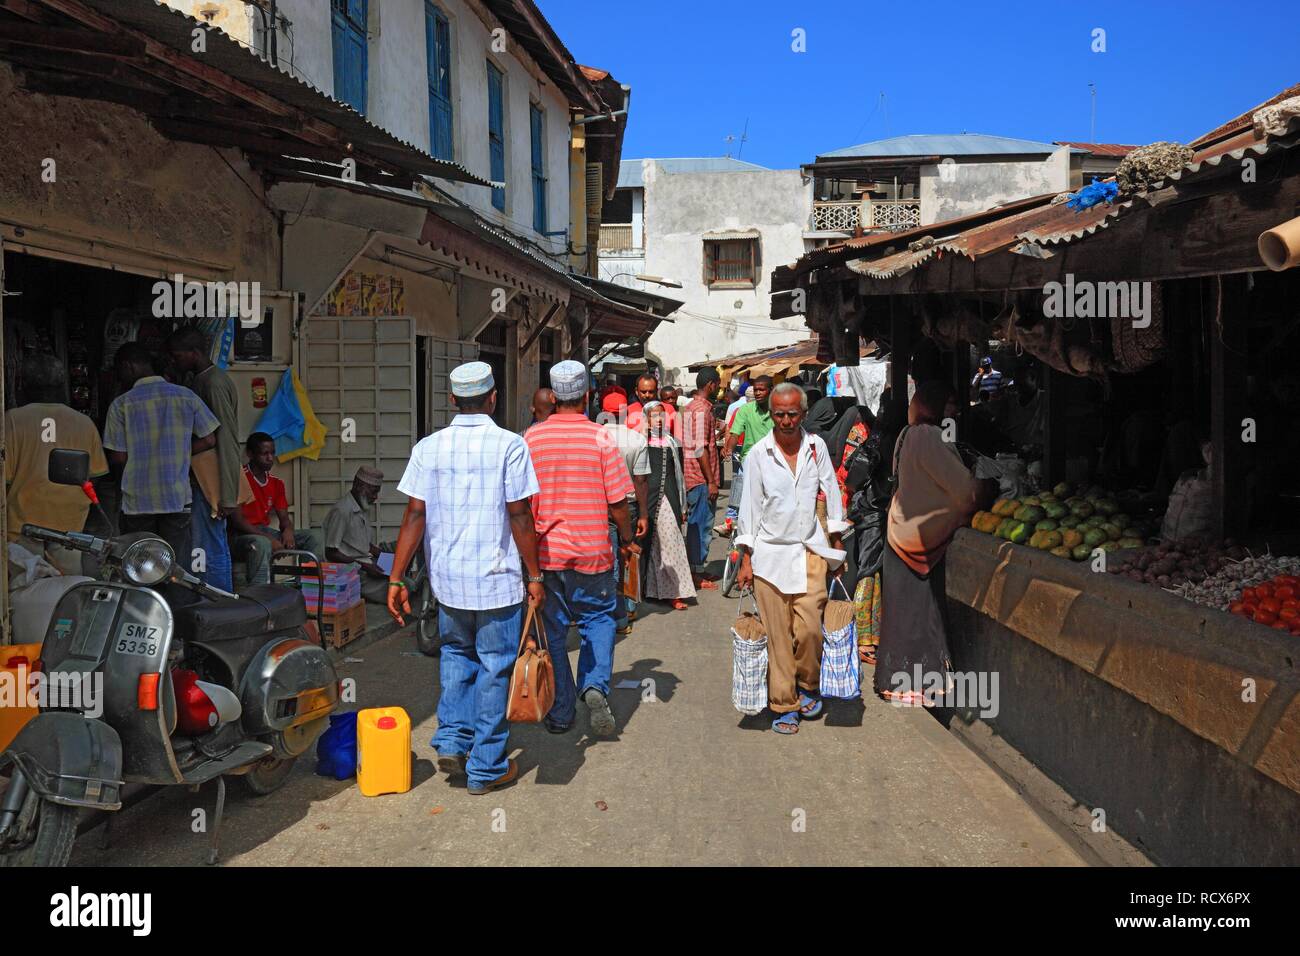 Scena di strada, Zanzibar, Tanzania Africa Foto Stock